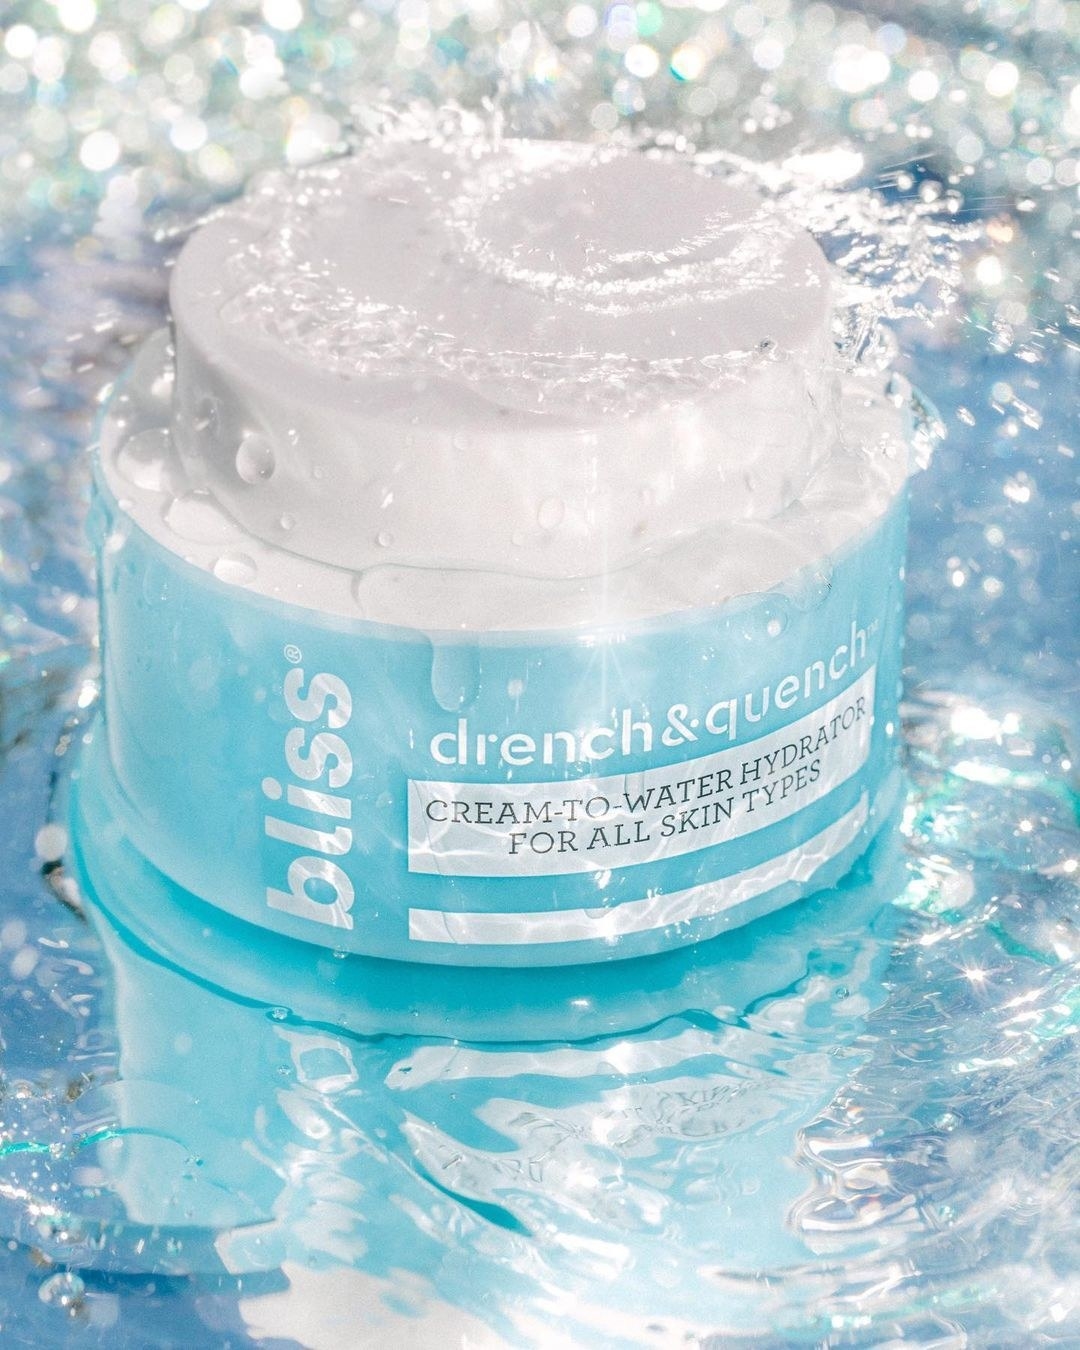 A blue jar of moisturizer splashed in water